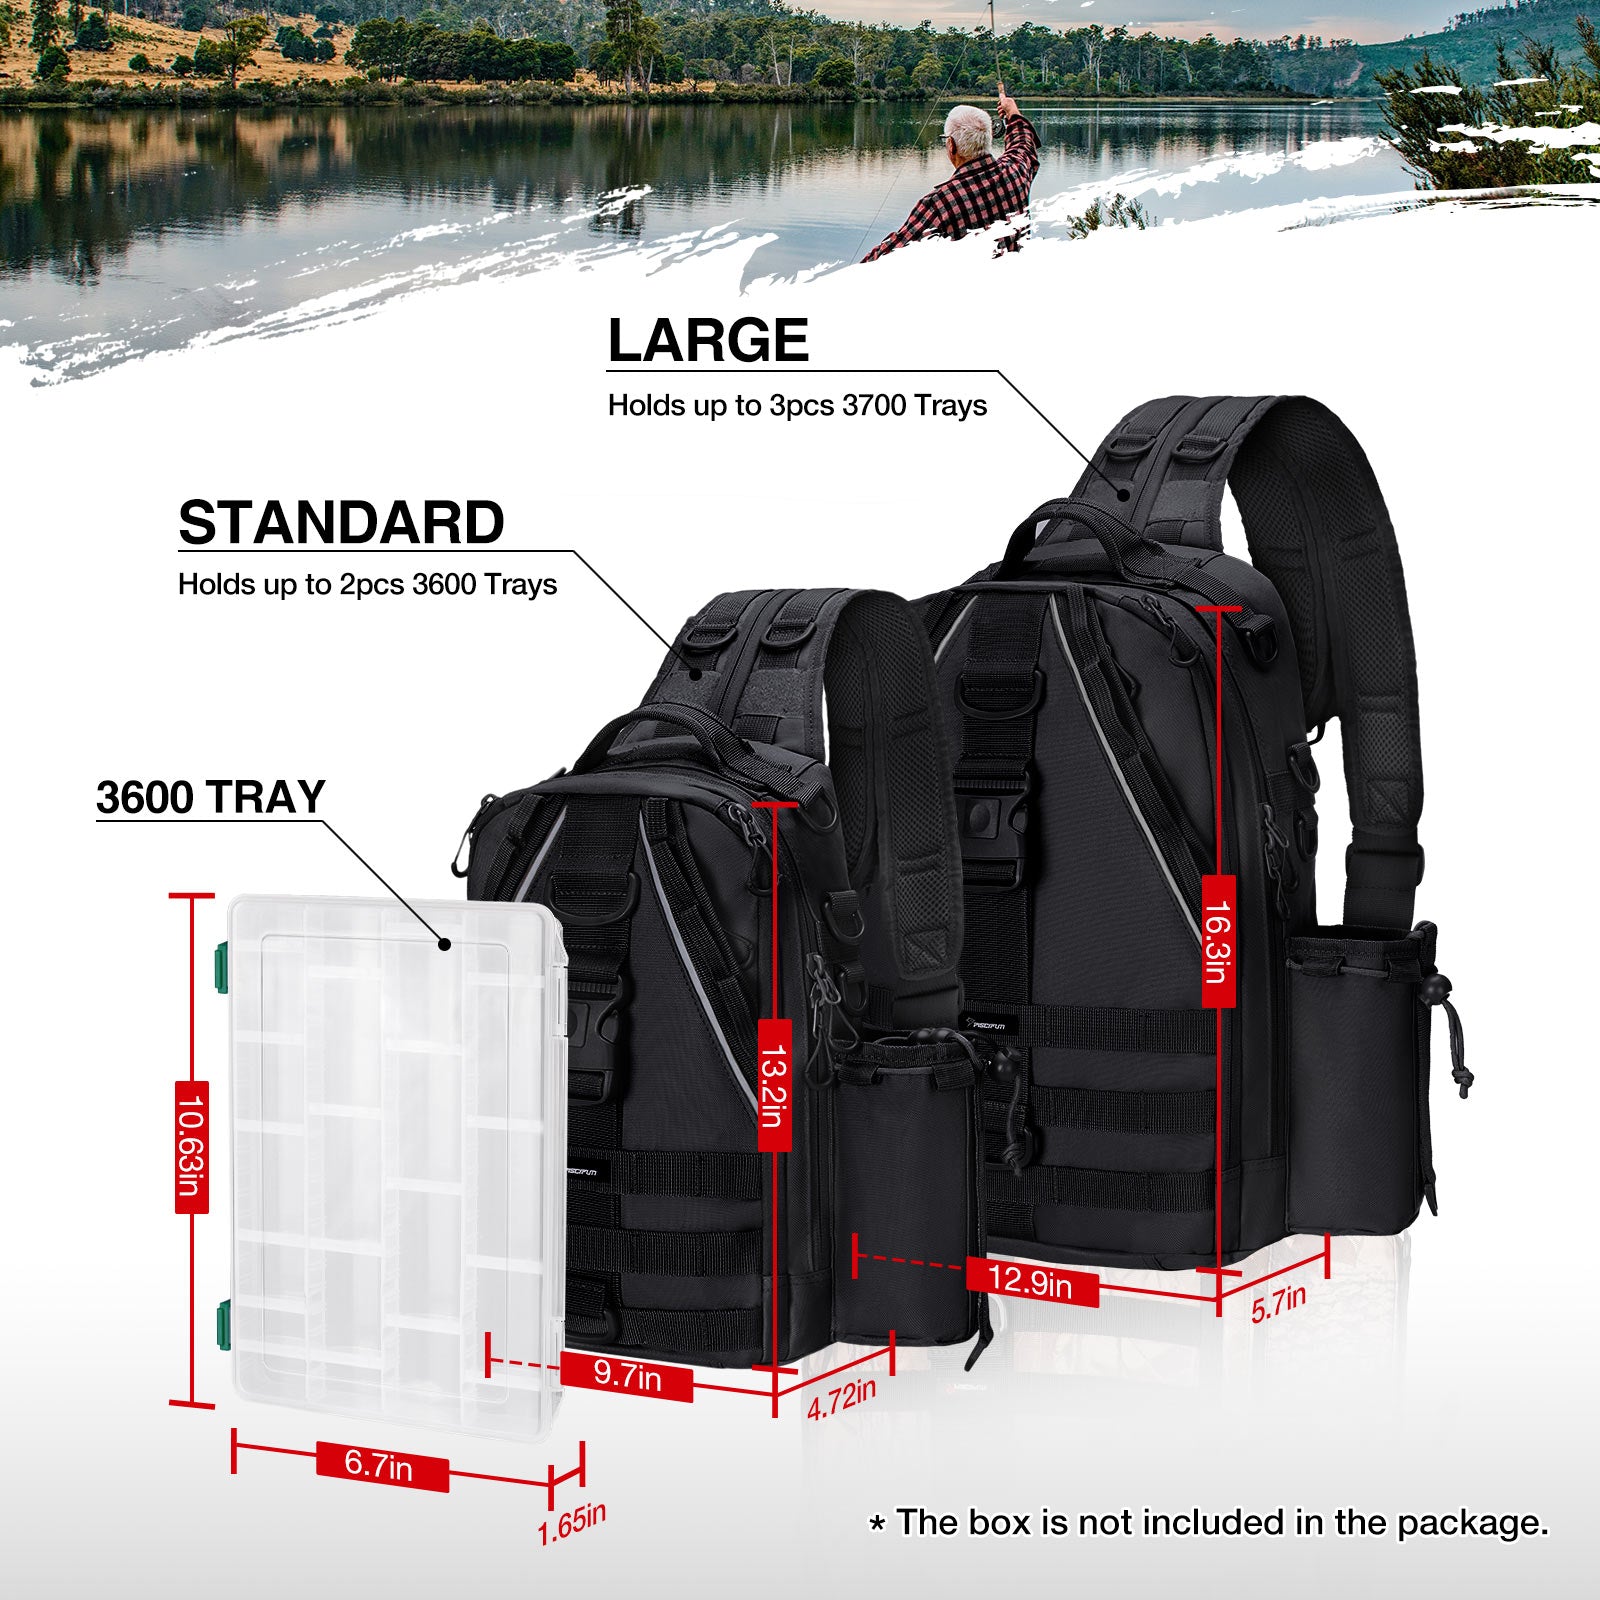 Romacci Fishing Tackle Storage Bag Outdoor Shoulder Water-Resistant Fishing Gear Bag Cross Body Sling Bag Black